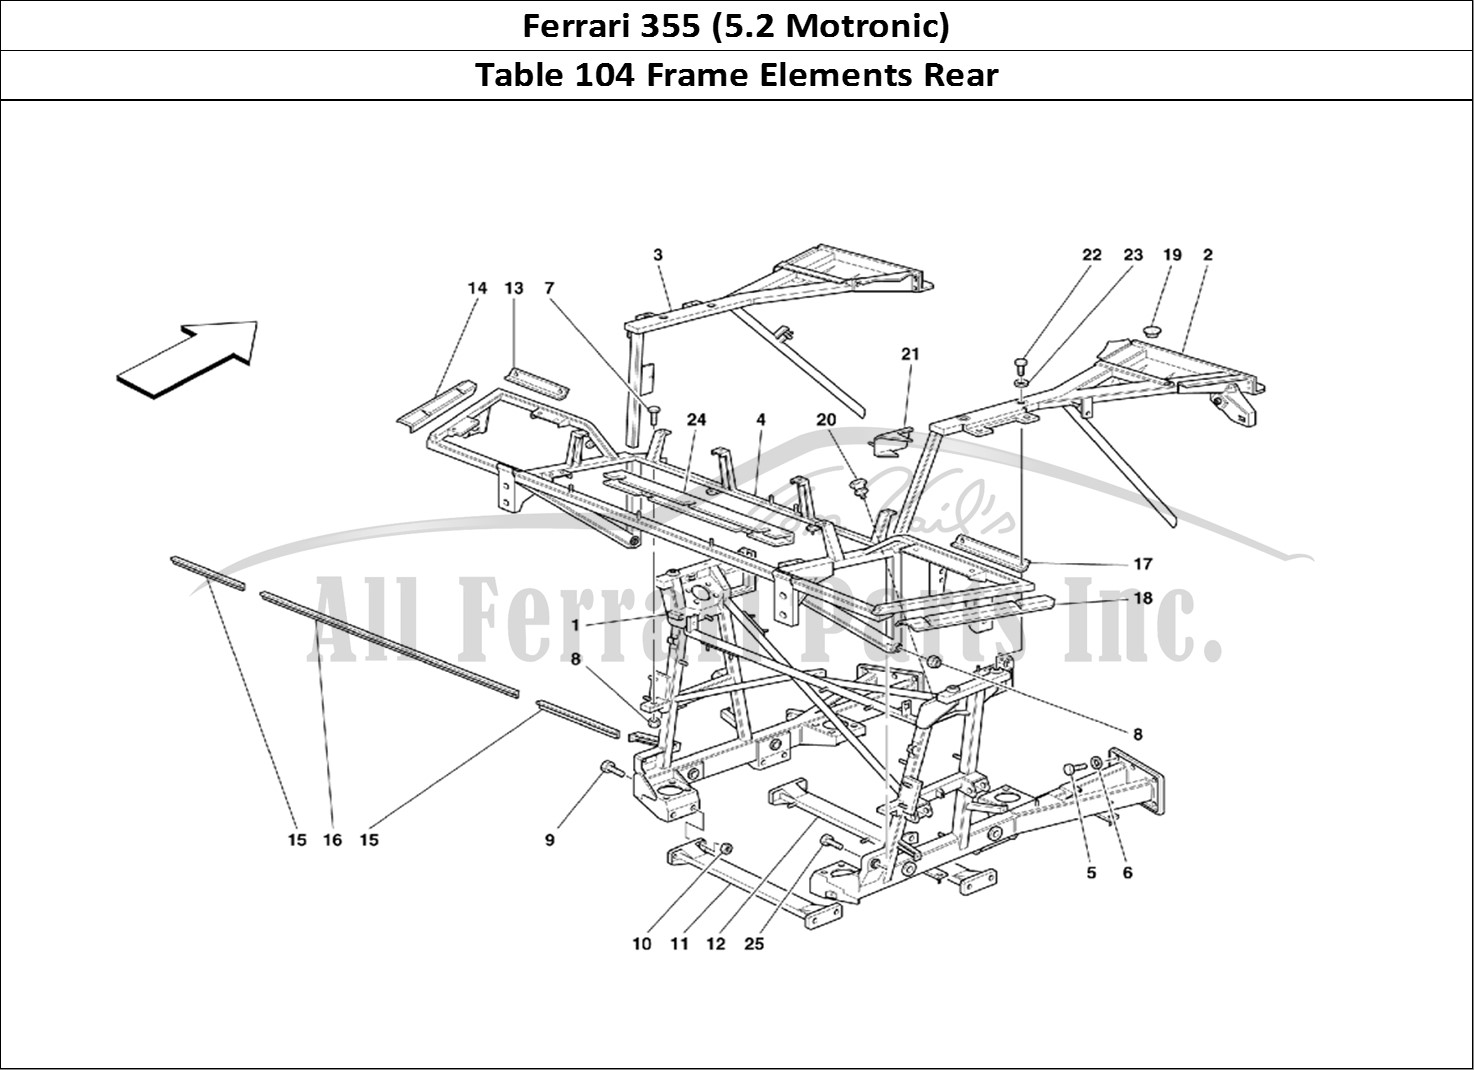 Ferrari Parts Ferrari 355 (5.2 Motronic) Page 104 Frame - Rear Part Element